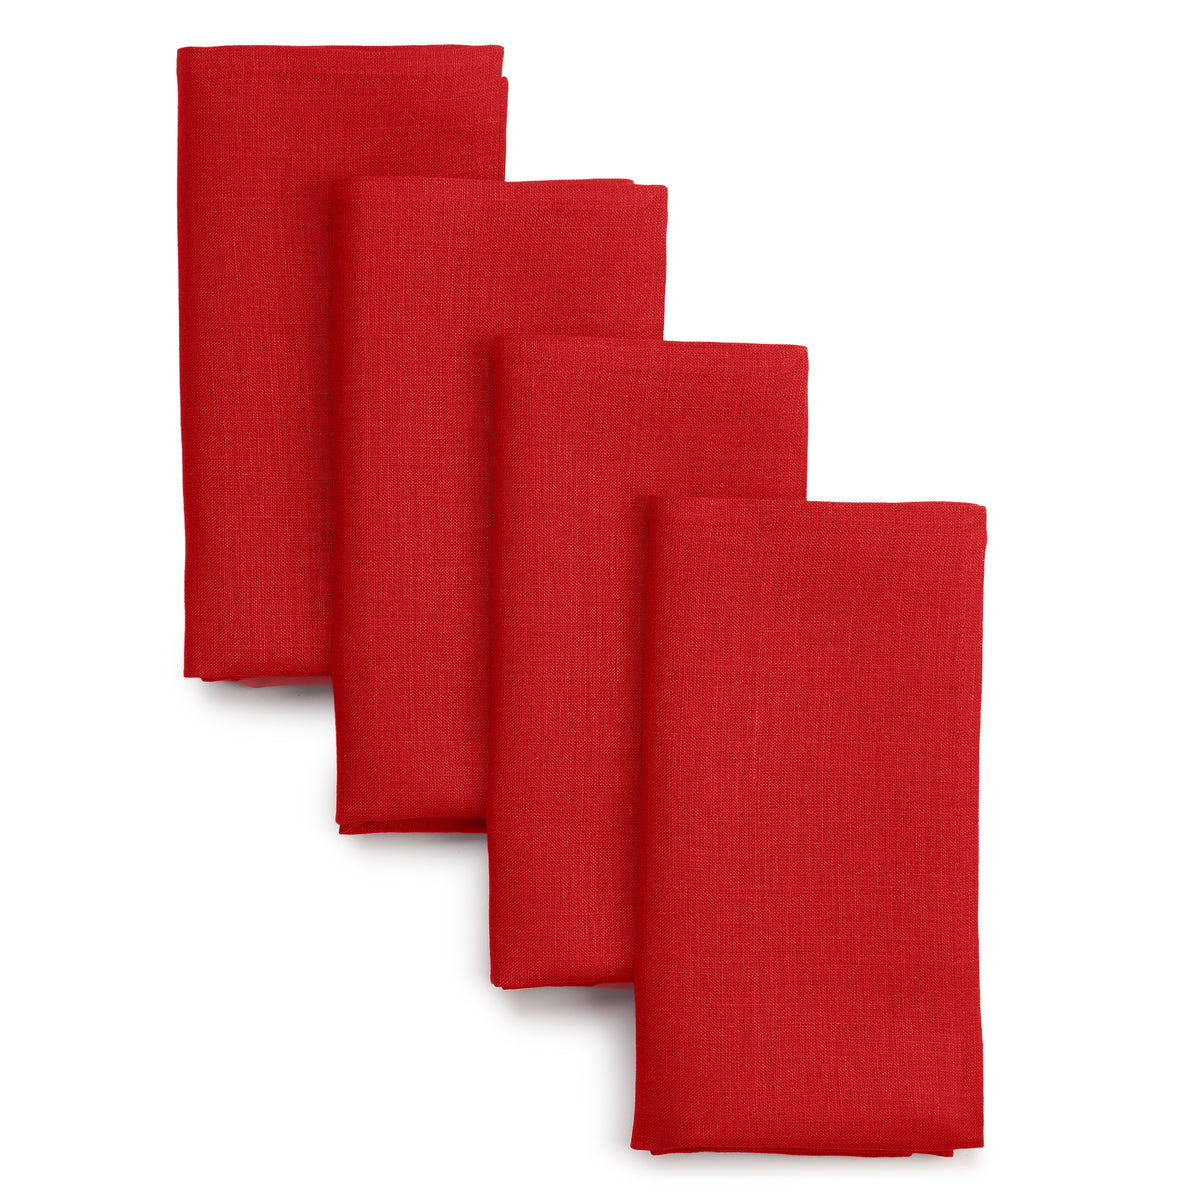 Bright Red Linen Dinner Napkins 18 x 18 Inch Set of 4 - Hemmed